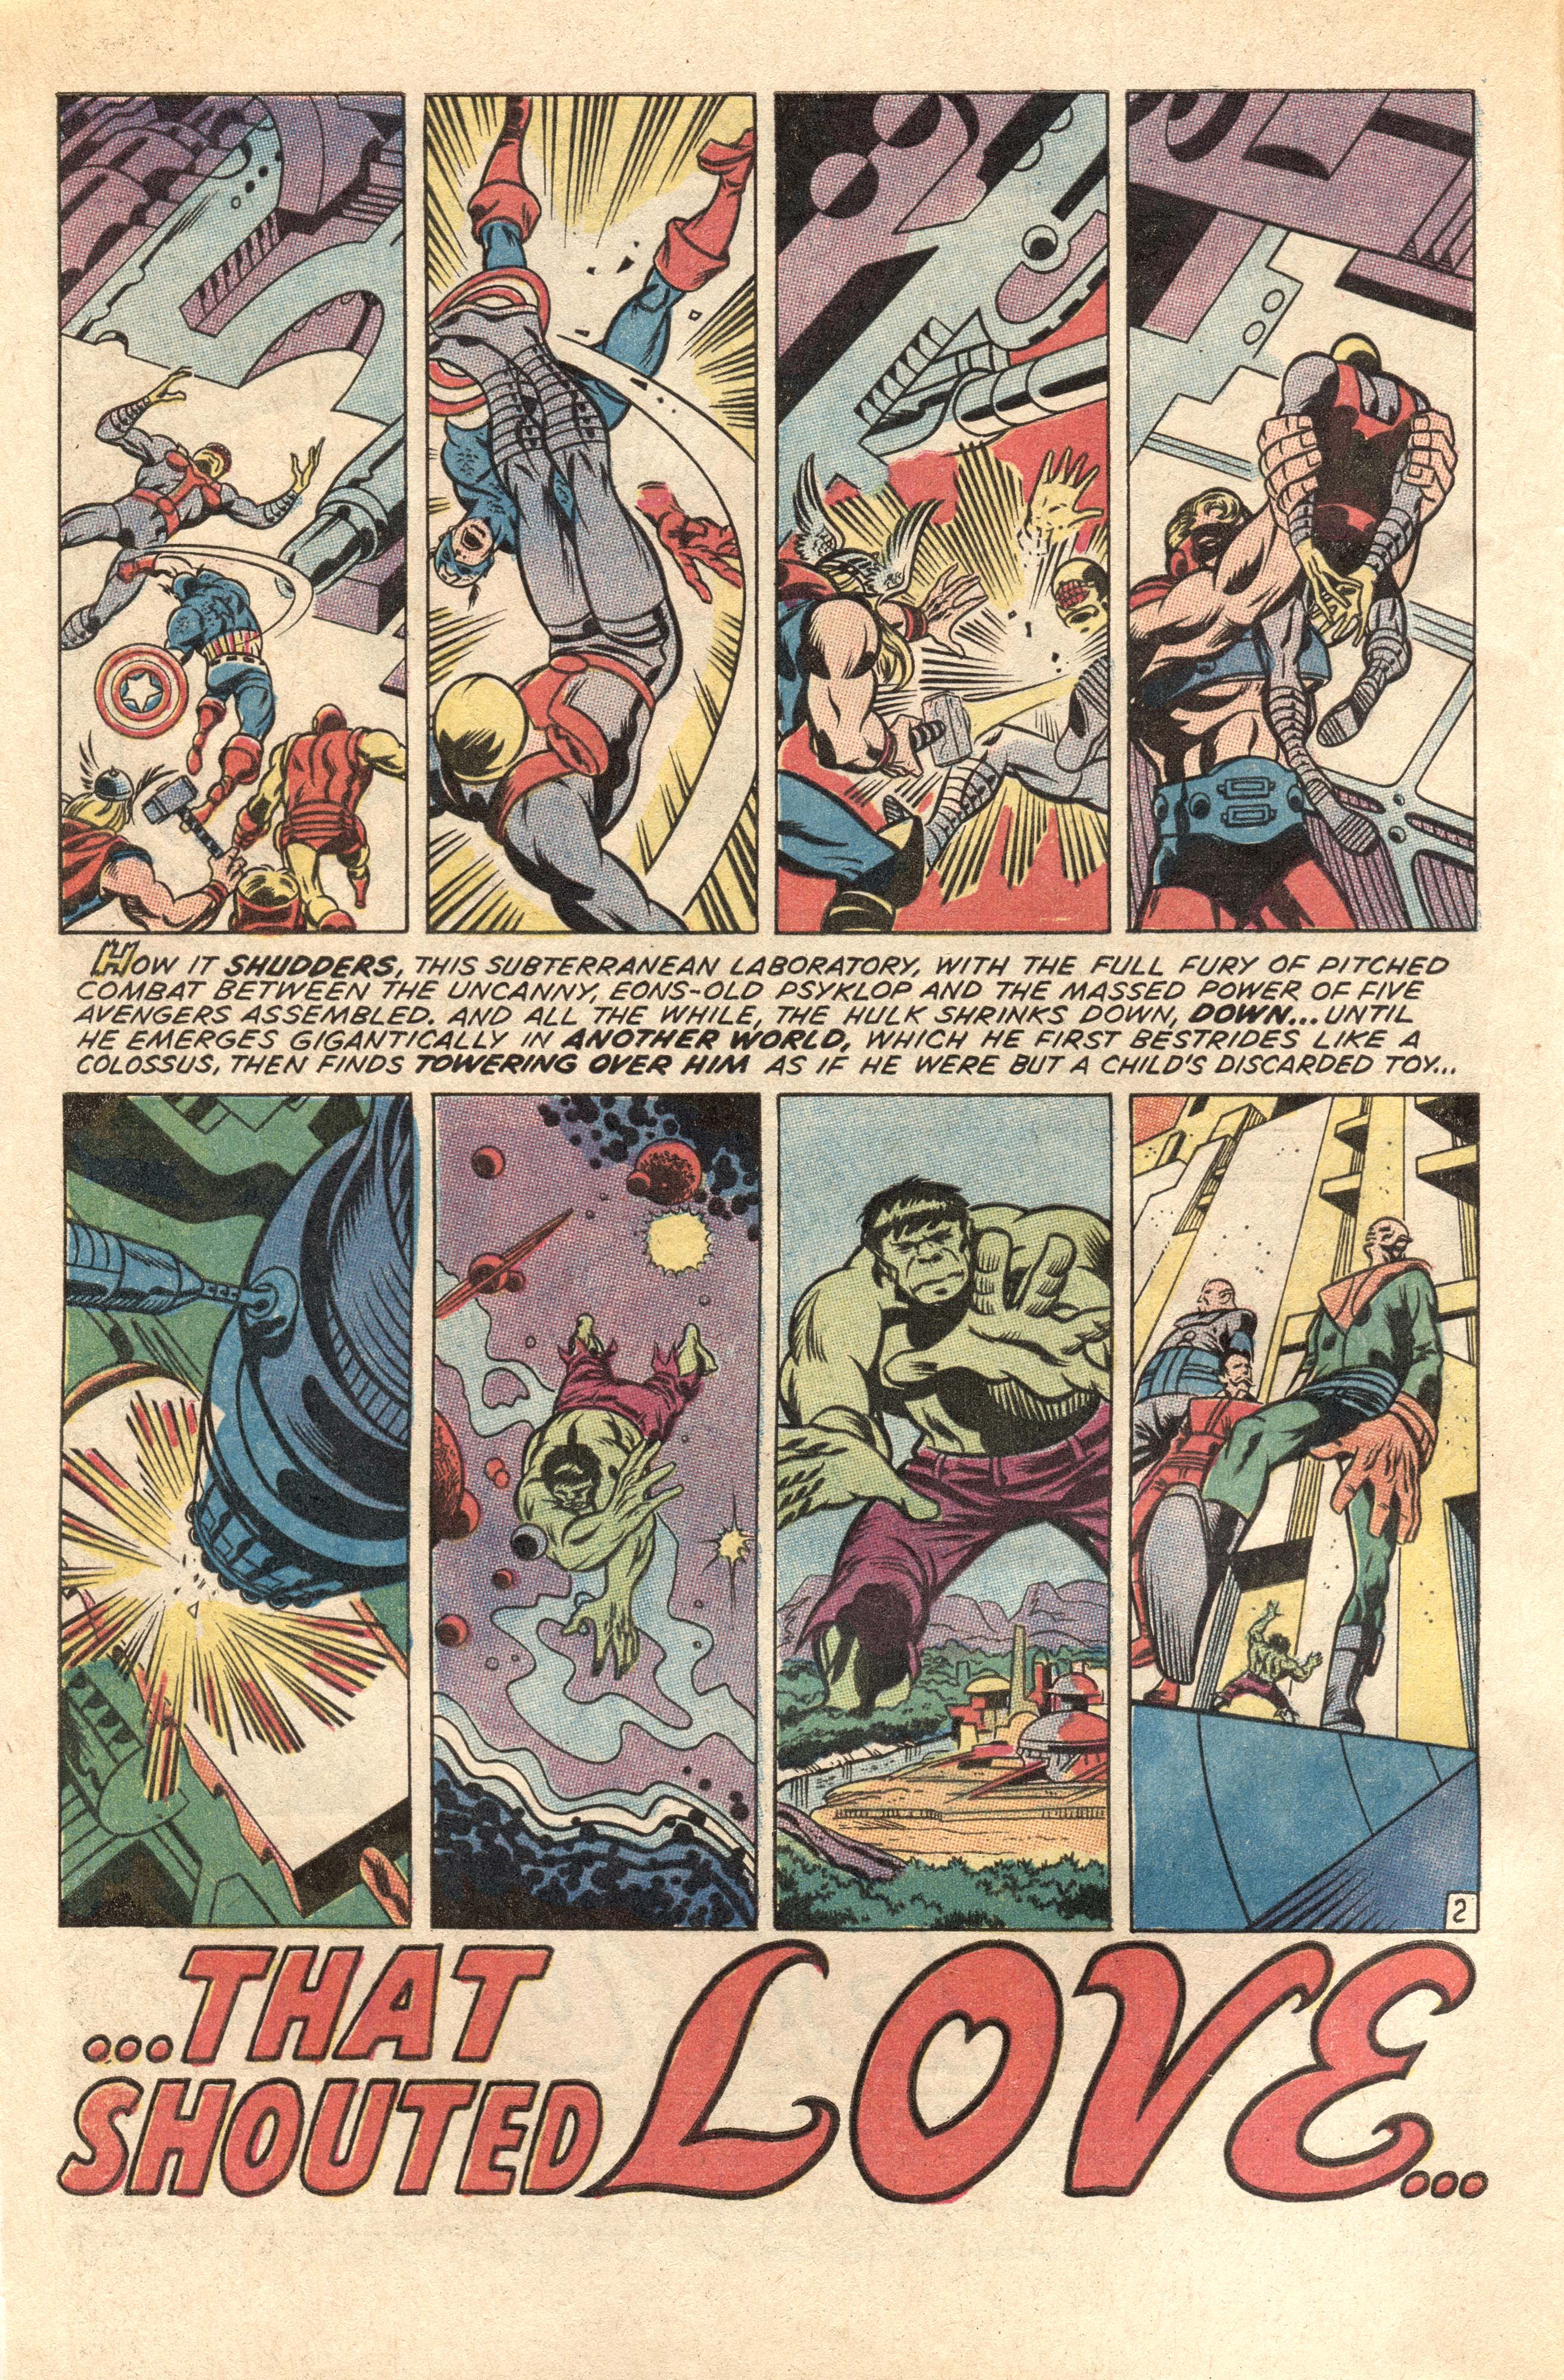 Incredible Hulk 140, p2, art by Herb Trimpe and Sam Grainger